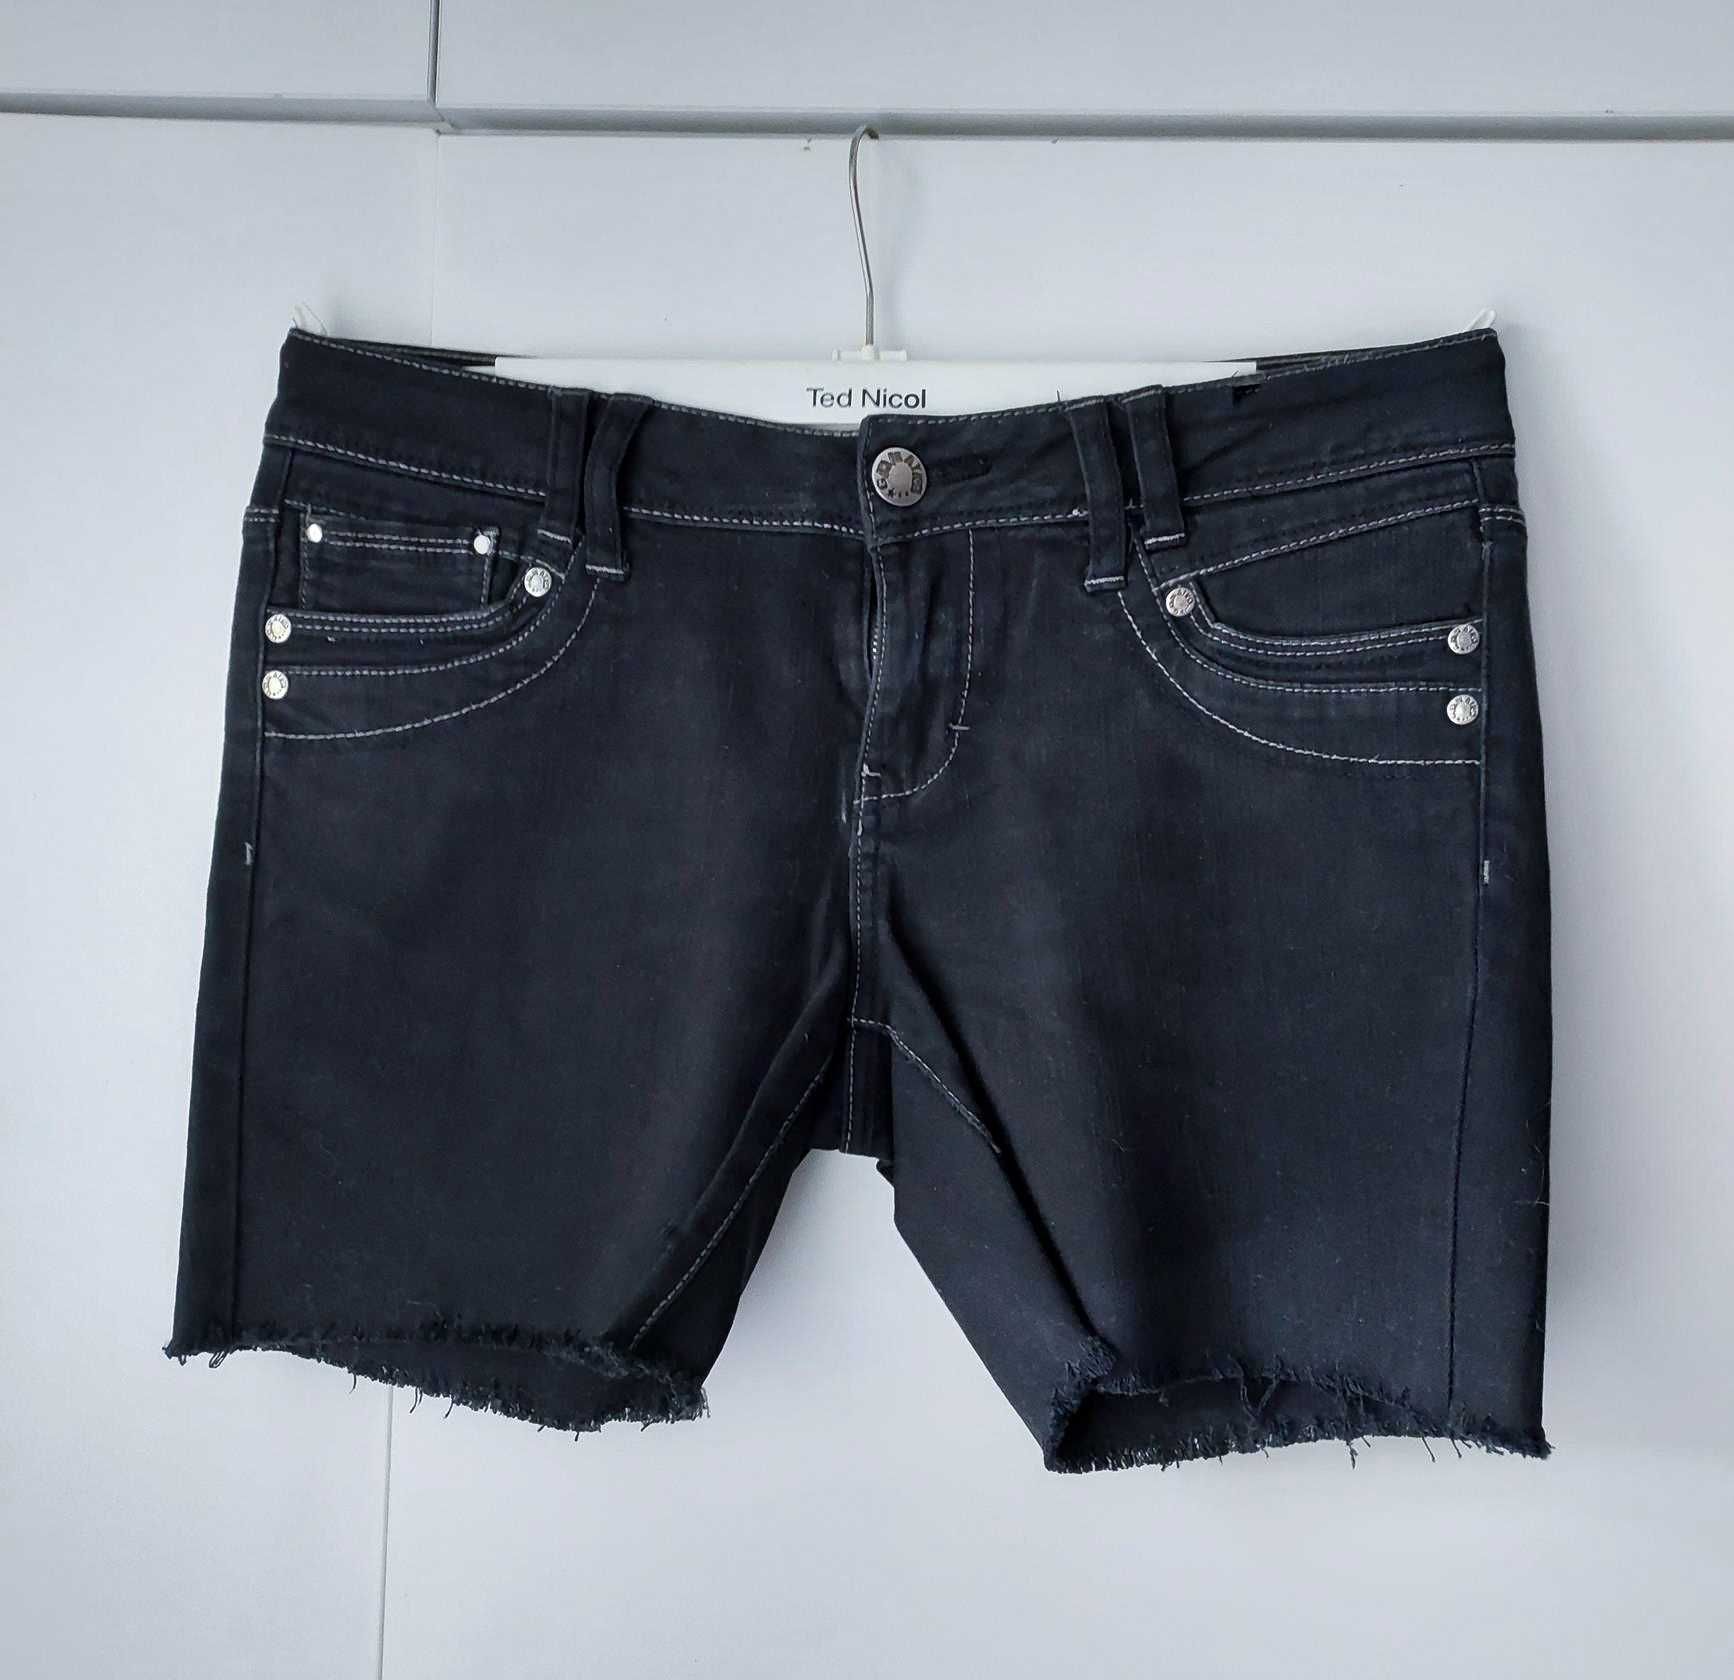 New Look Generation szorty jeans czarne 164 cm / 15 lat